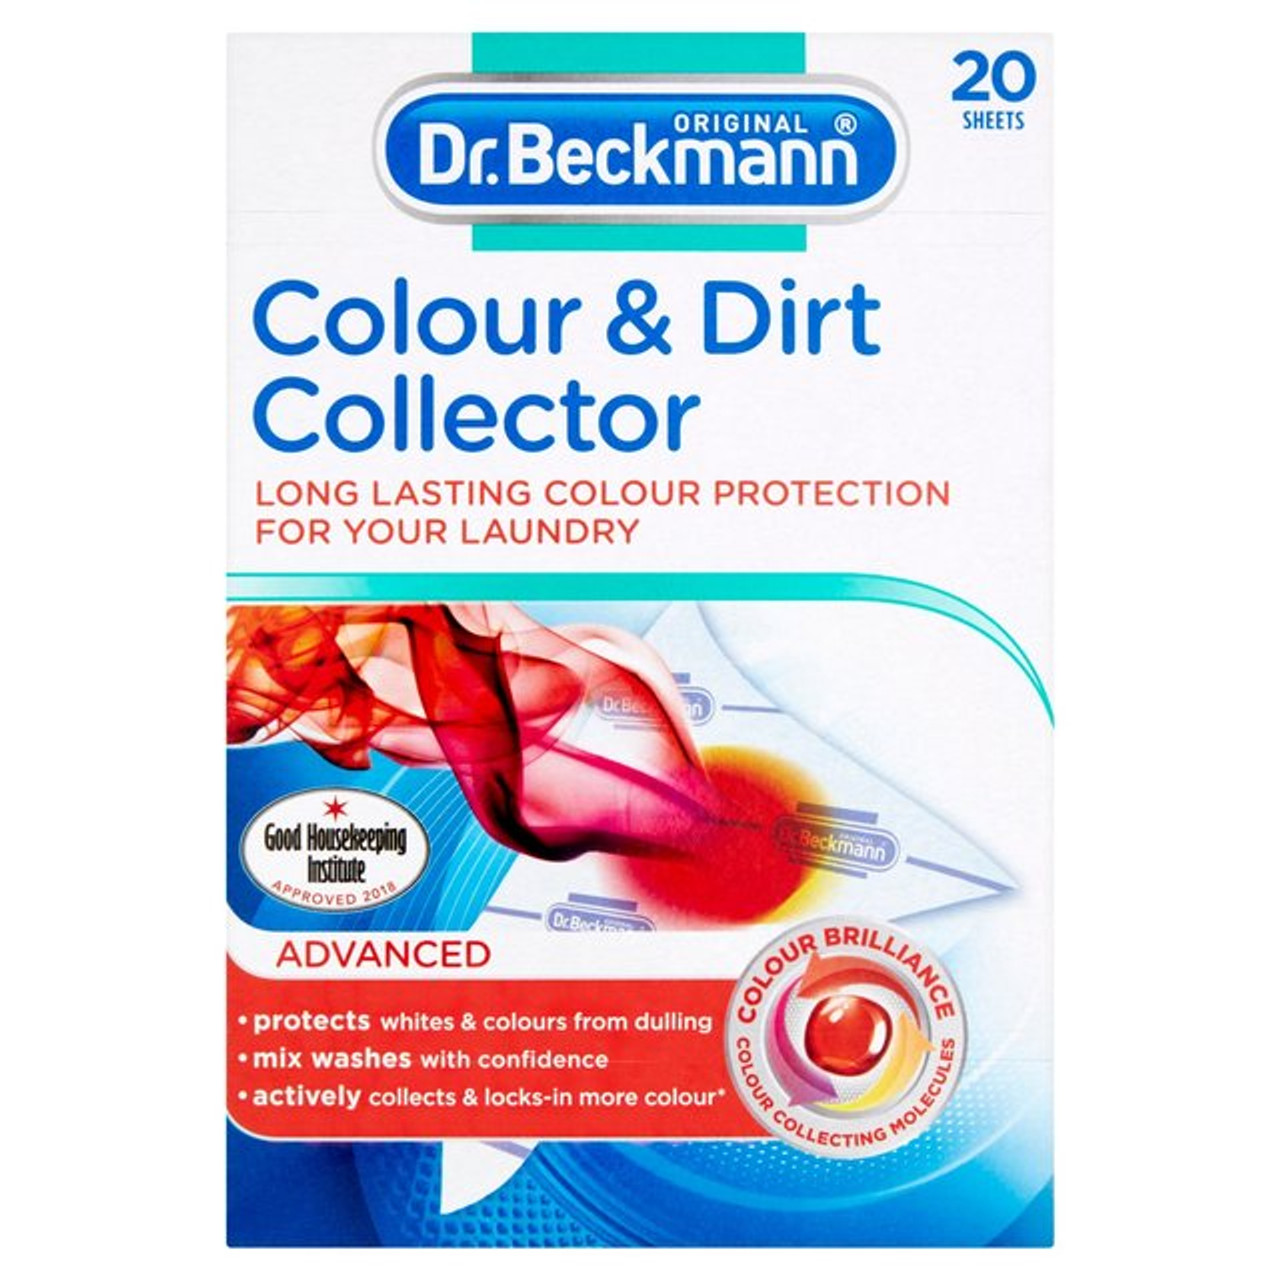 Dr. Beckmann Colour & Dirt Collector 20 Microfibre Sheets 20 per pack Caletoni - International Grocer